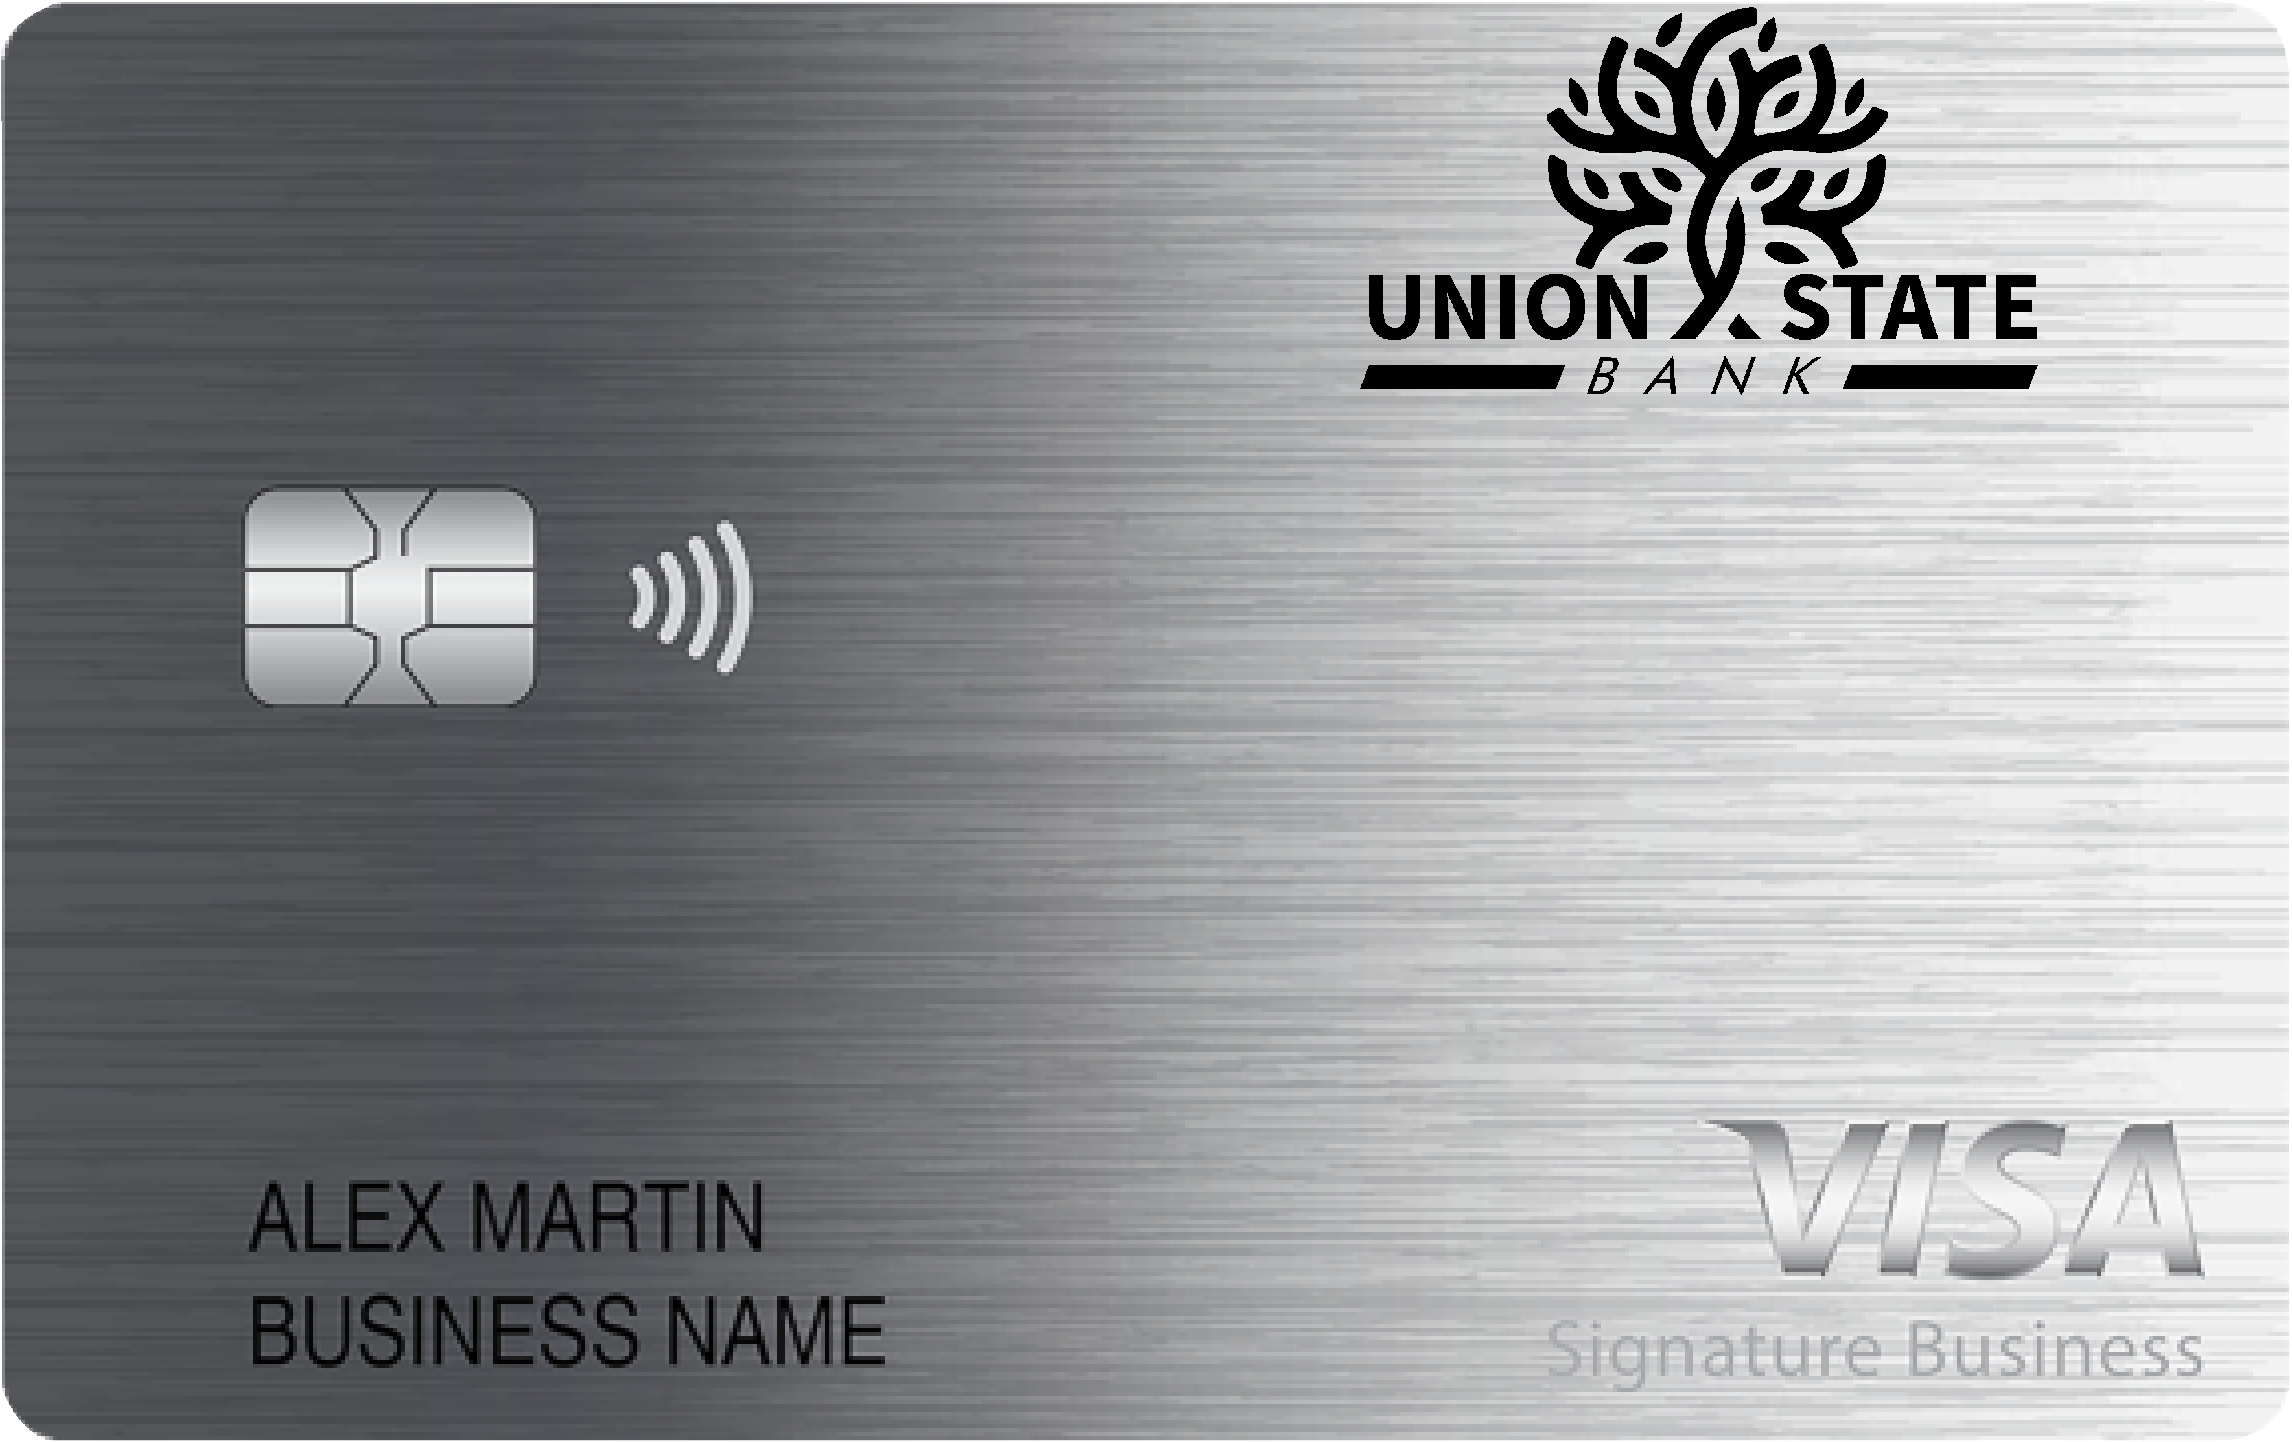 Union State Bank Smart Business Rewards Card